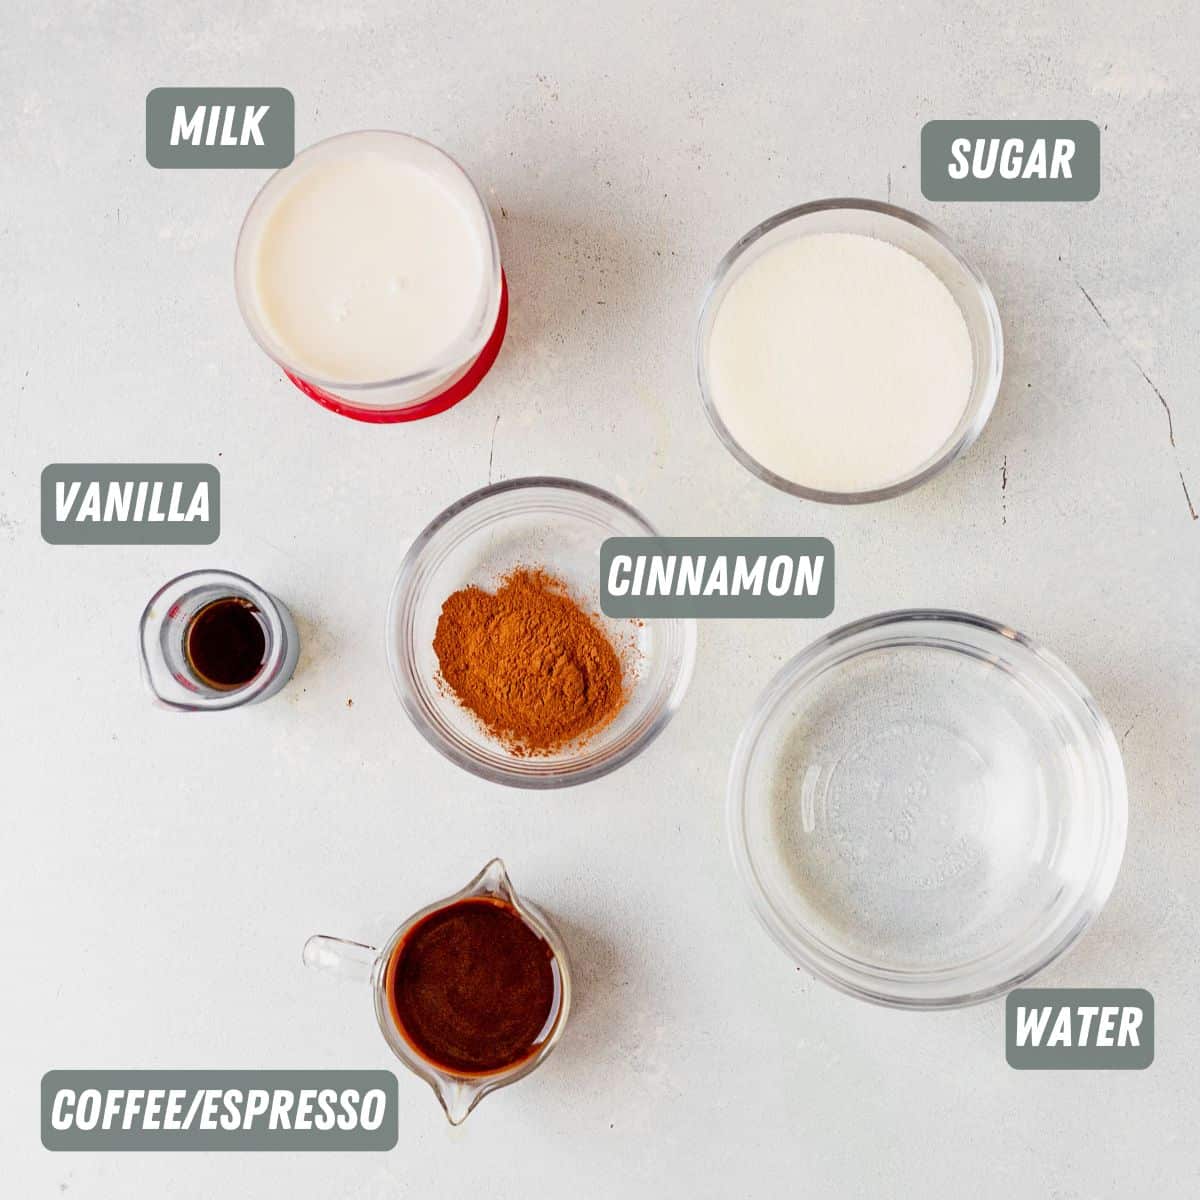 iced cinnamon dolce latte ingredients